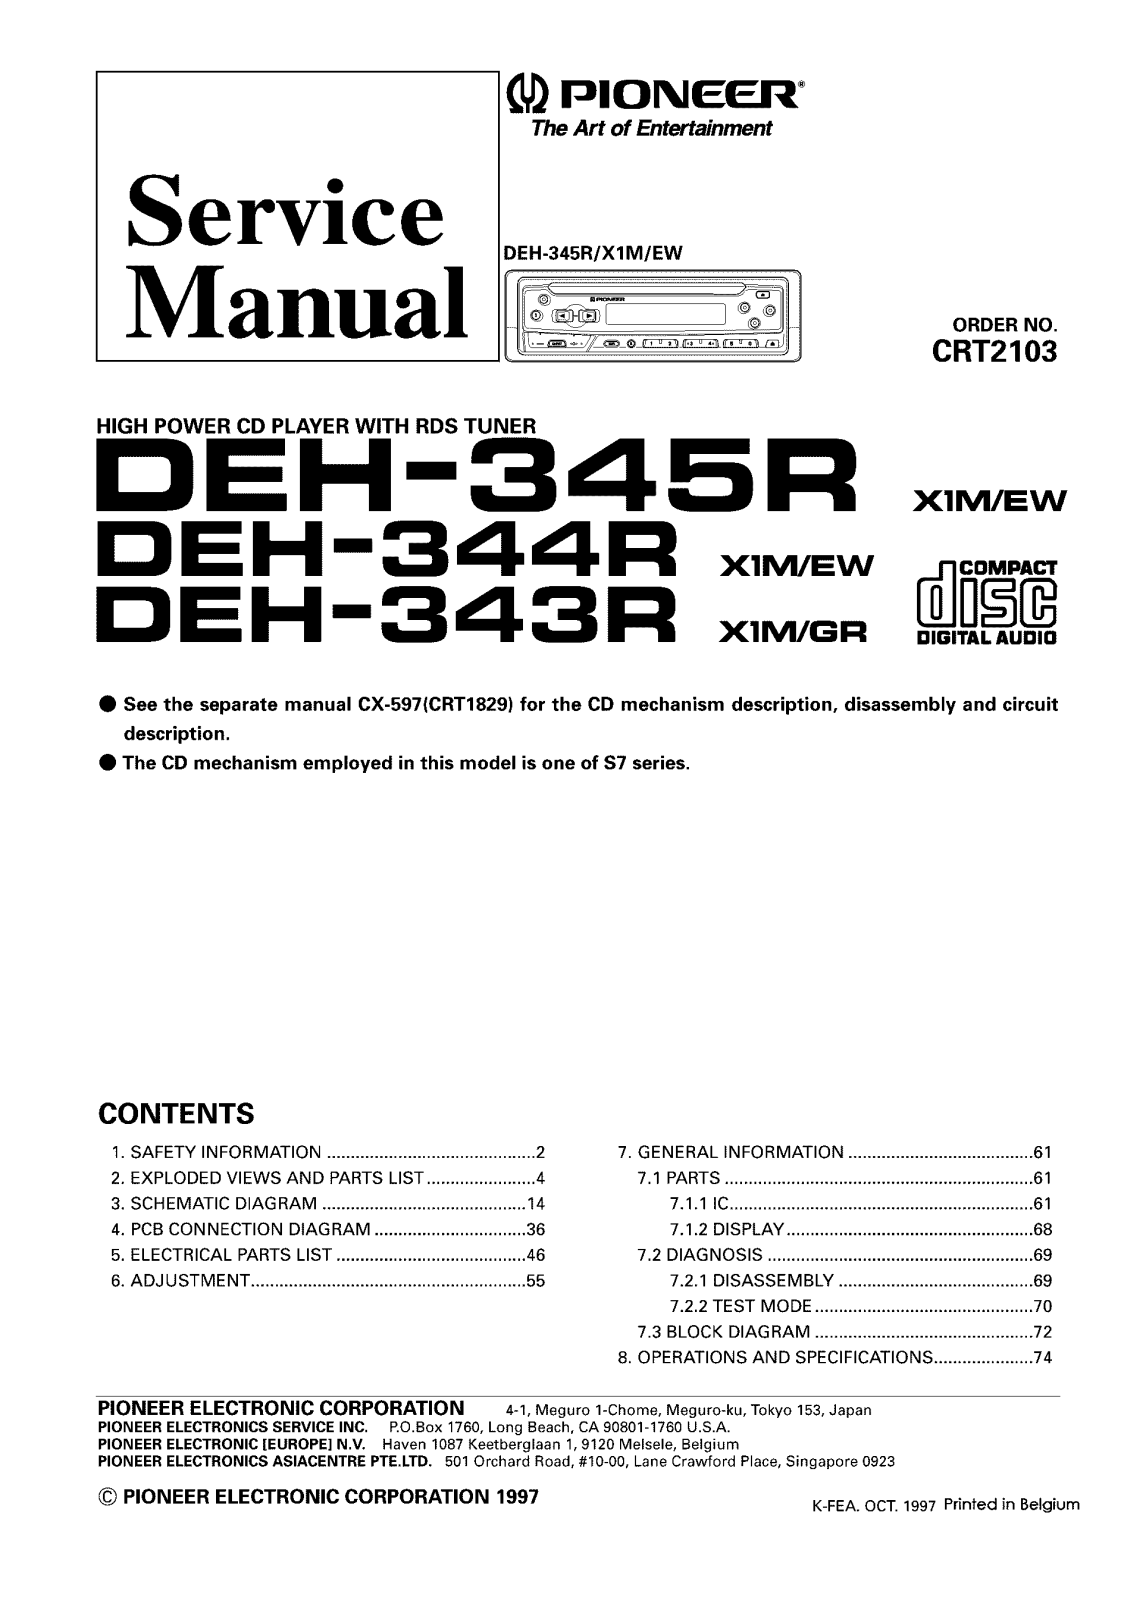 Pioneer DEH-343-R, DEH-344-R, DEH-345-R Service manual